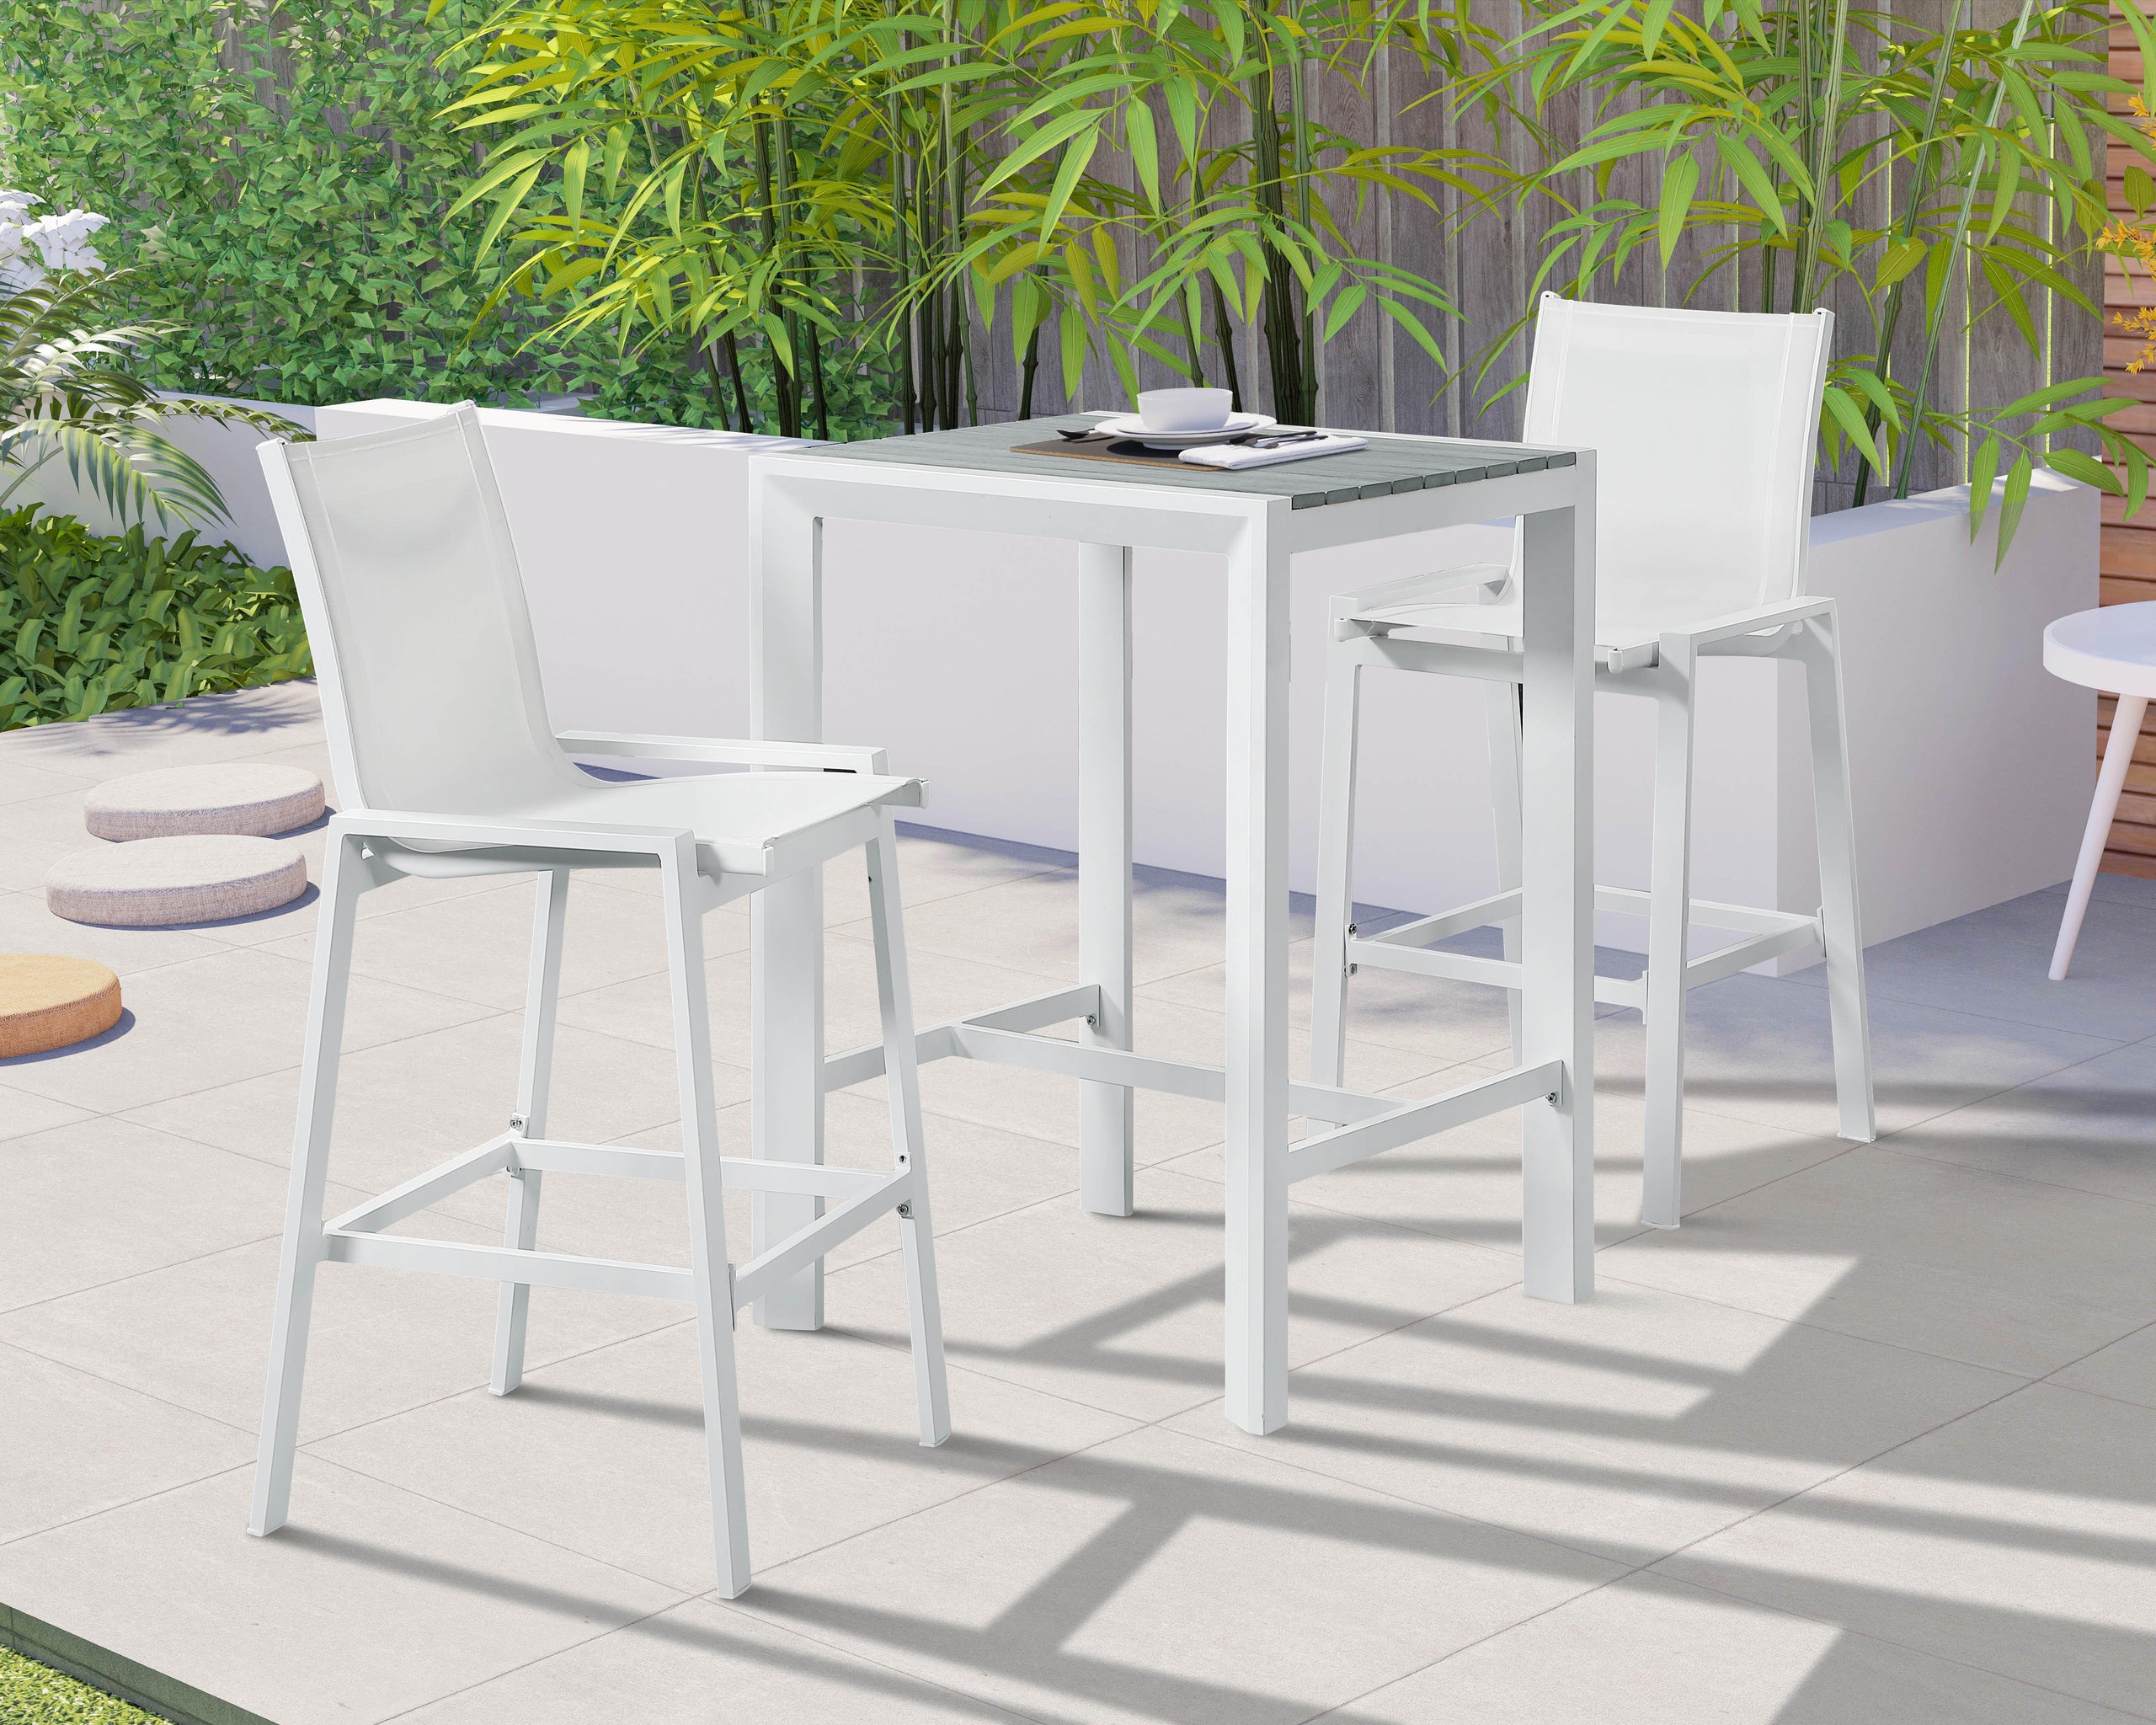 Meridian Furniture - Nizuc - Outdoor Patio Square Bar Table - 5th Avenue Furniture